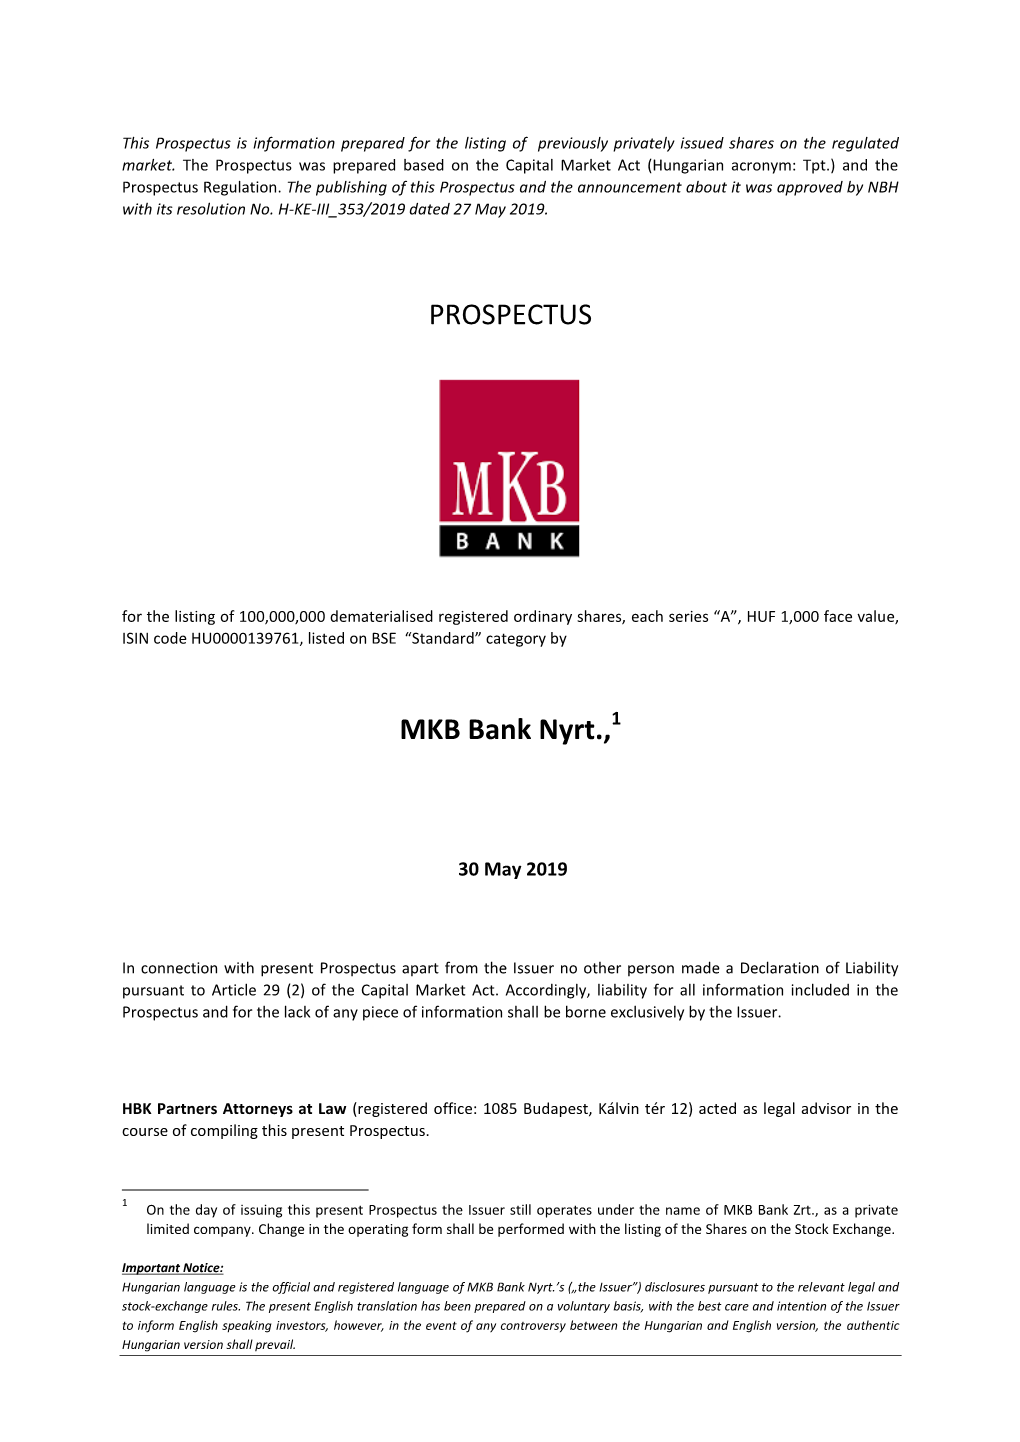 PROSPECTUS MKB Bank Nyrt